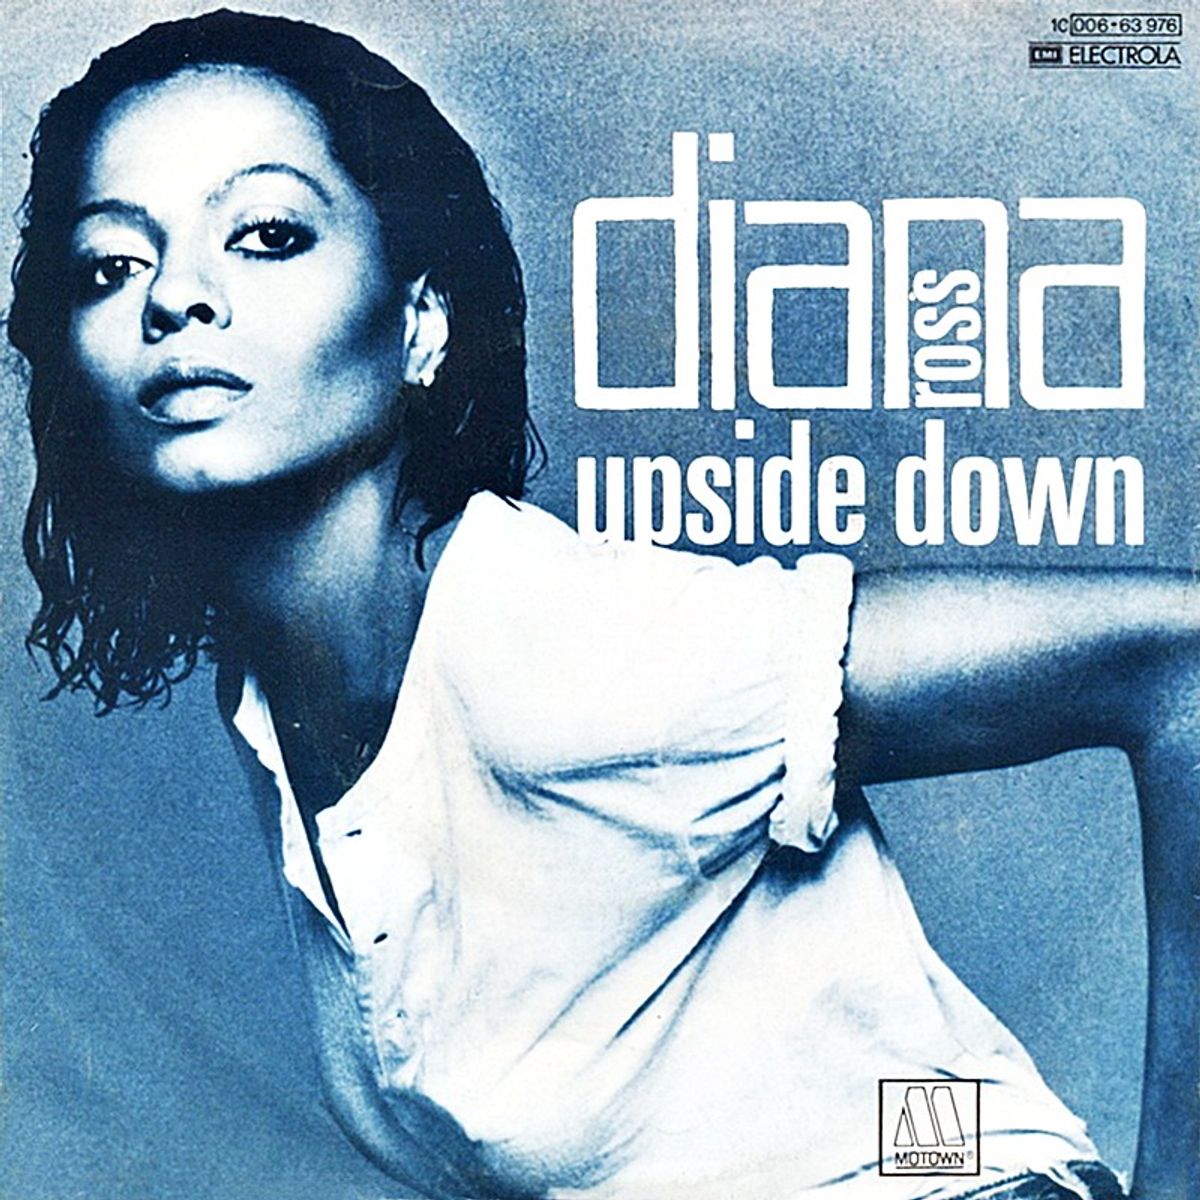 #CestDuNile - Diana Ross - Upside Down (1980)